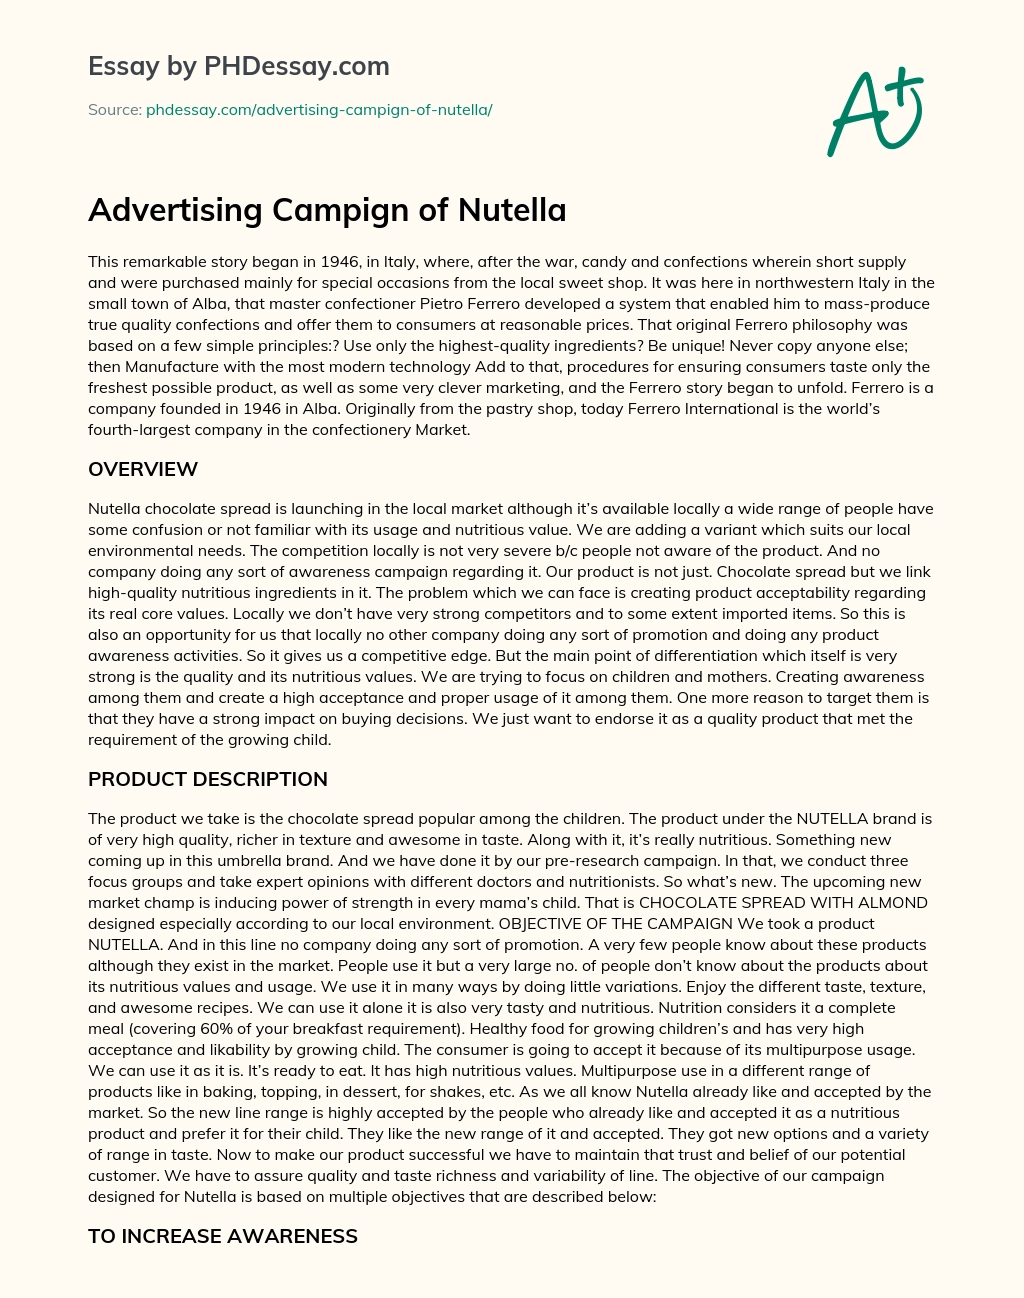 Advertising Campign of Nutella essay